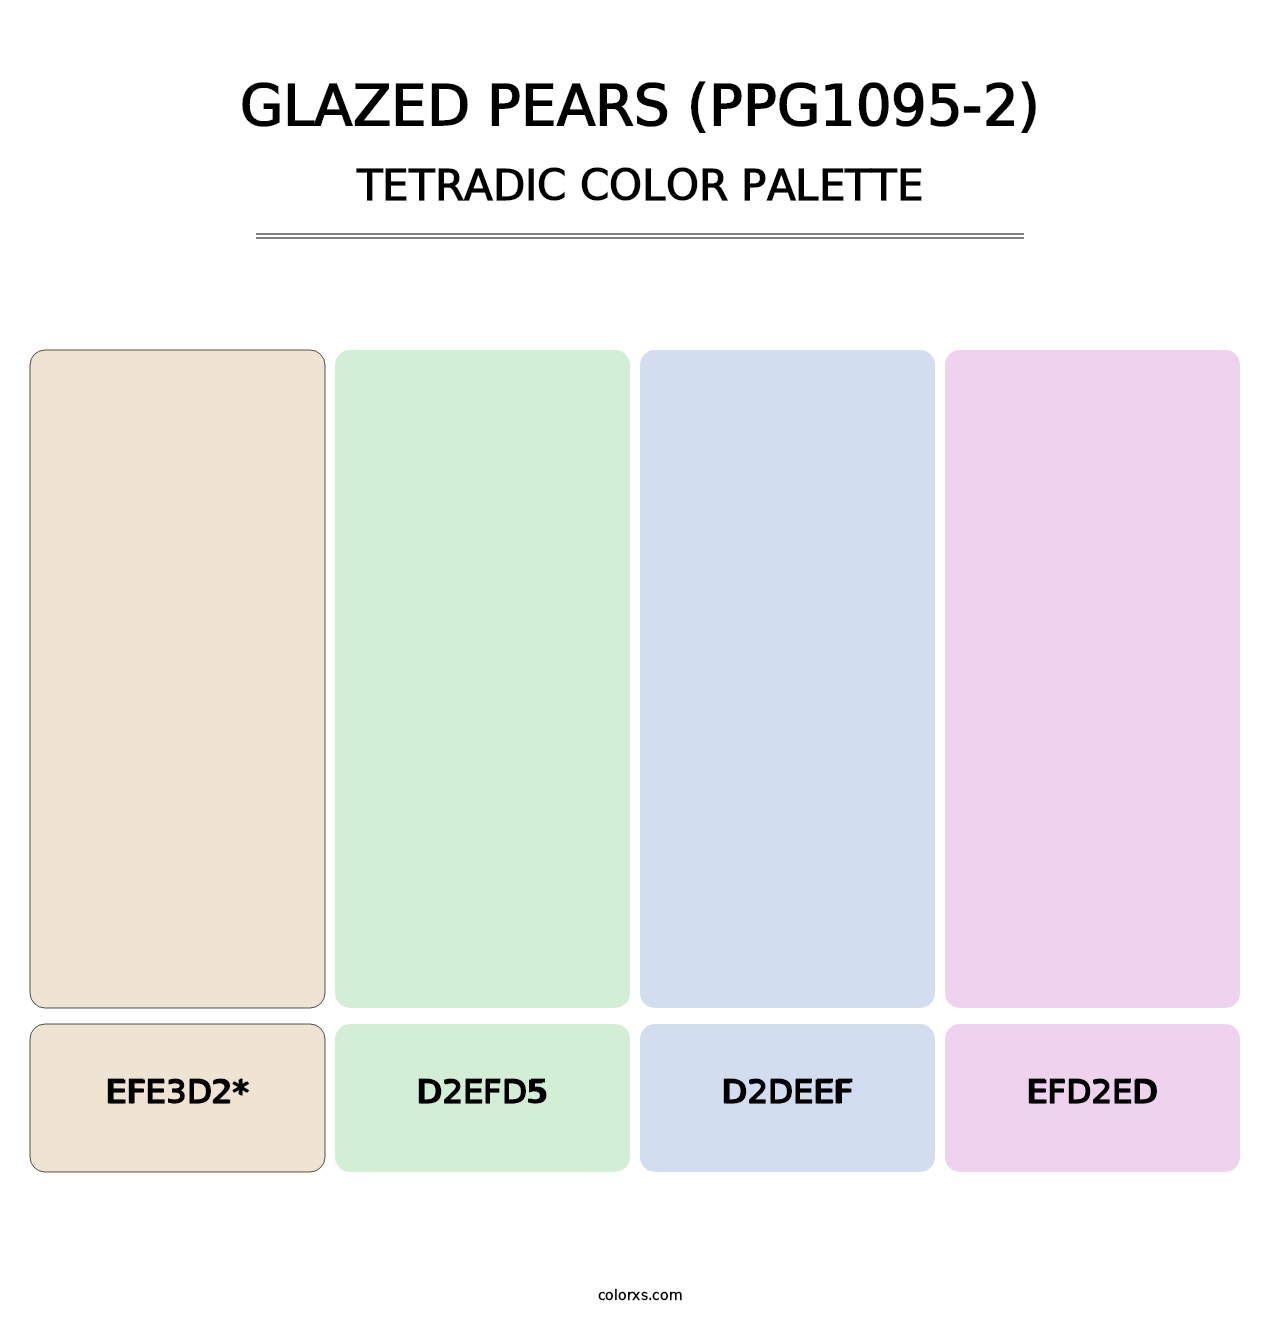 Glazed Pears (PPG1095-2) - Tetradic Color Palette